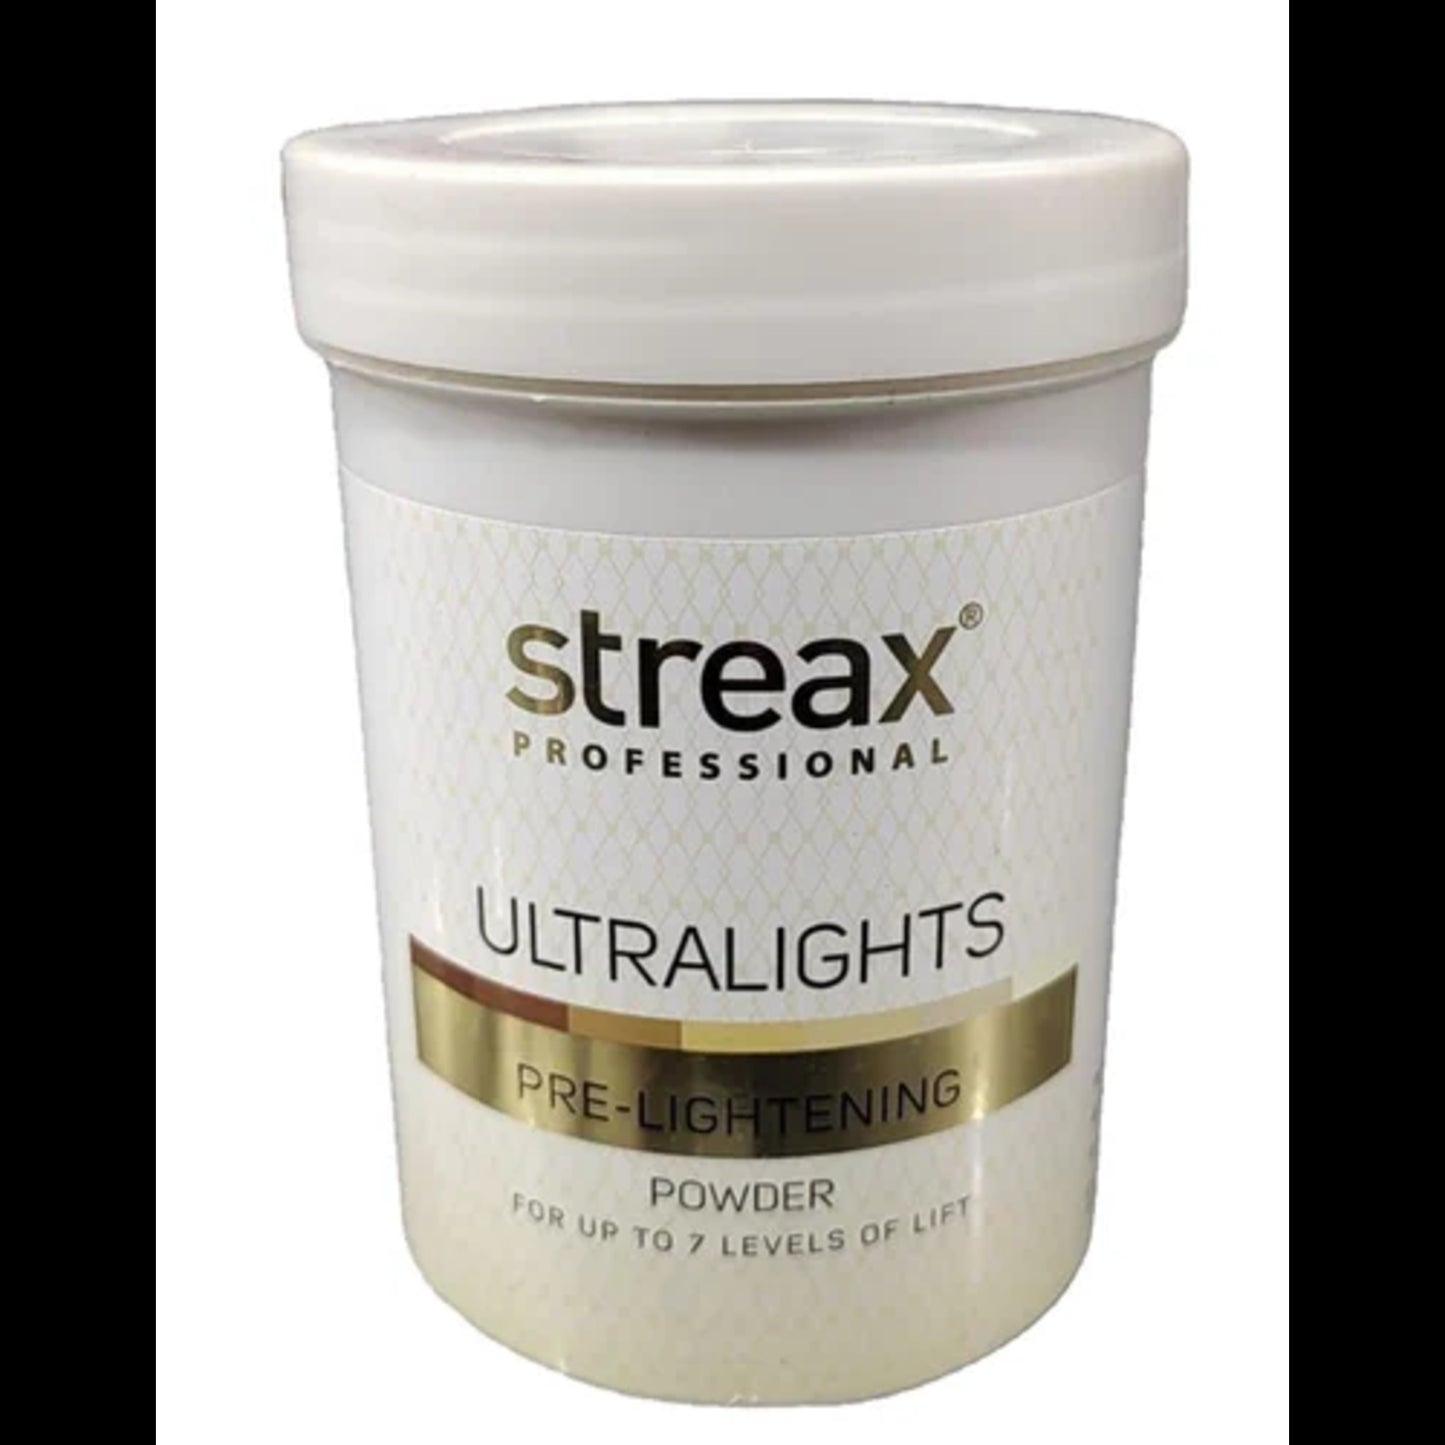 Streax Ultralights Pre Lightening Powder